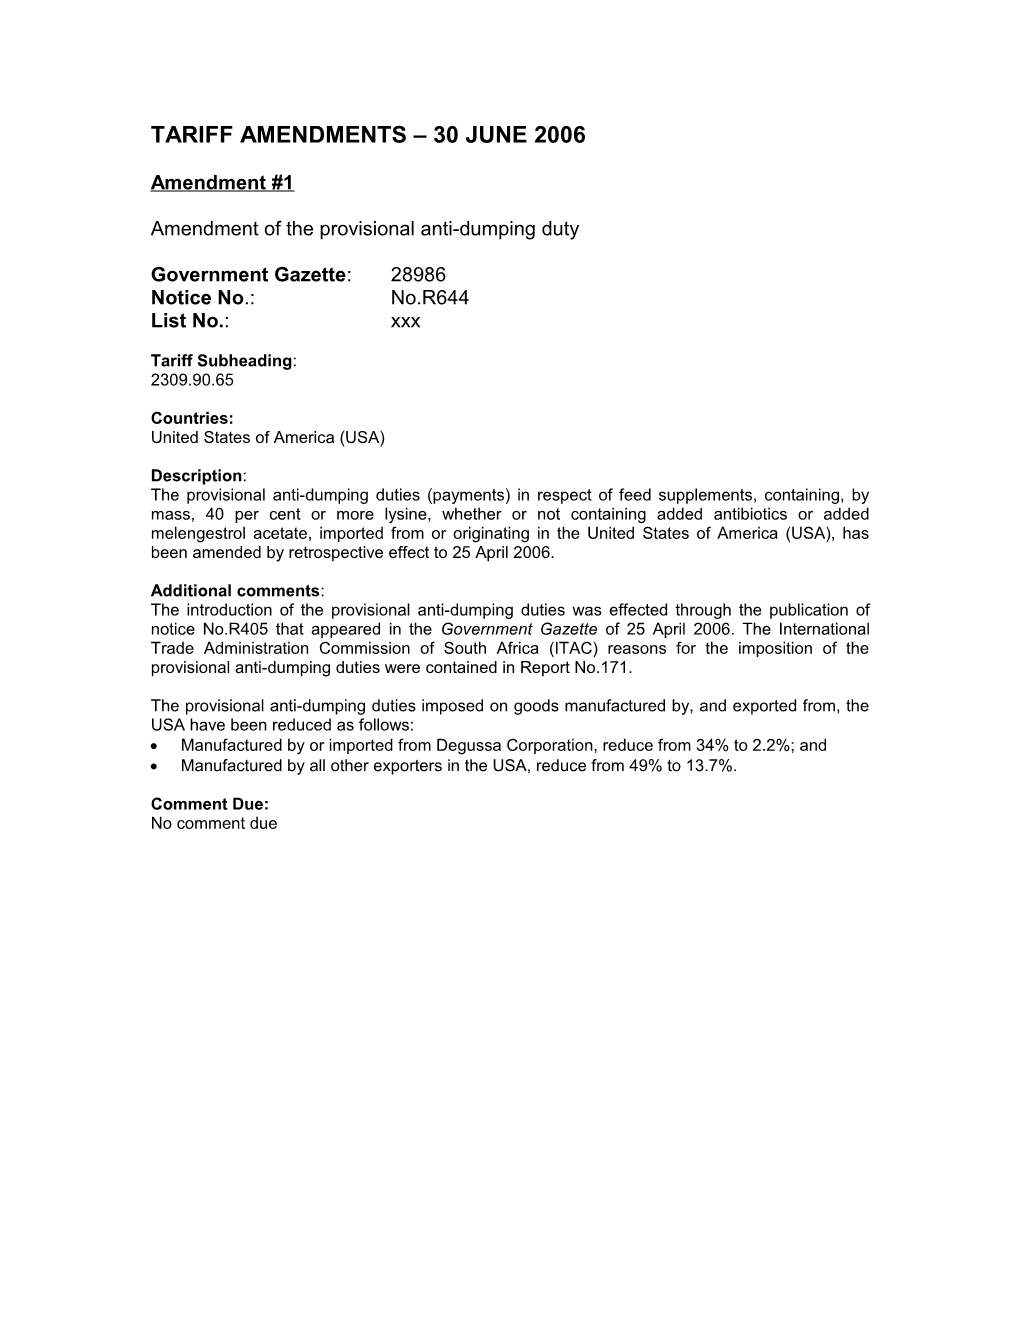 Amendment of the Provisional Anti-Dumping Duty